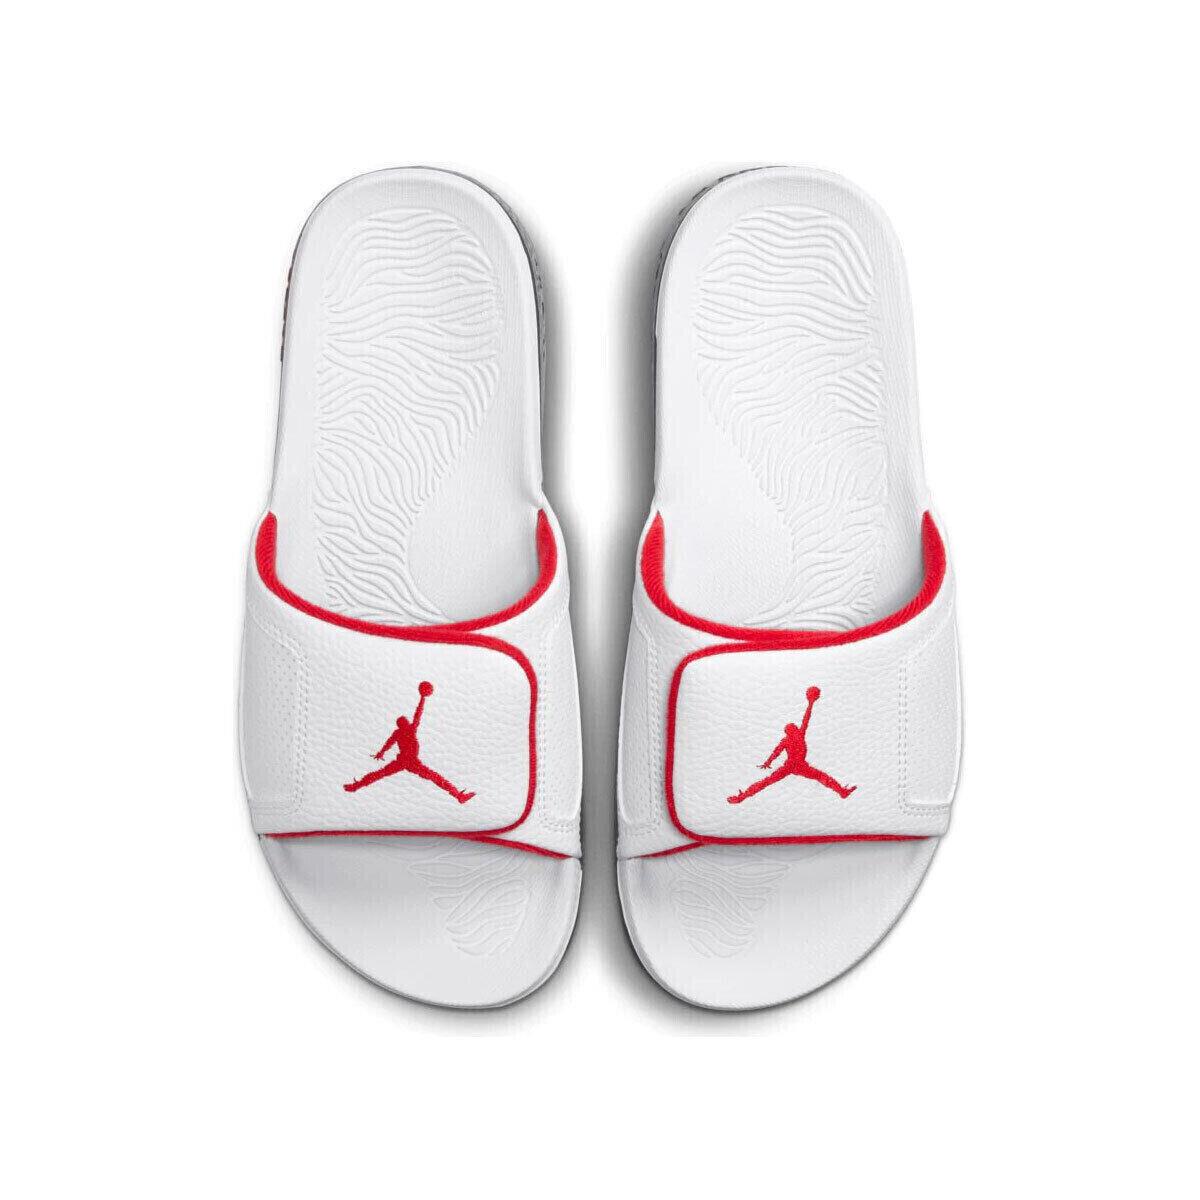 Nike Air Jordan Hydro Iii 3 Retro White Red Slides Size 8 Mens 854556 103